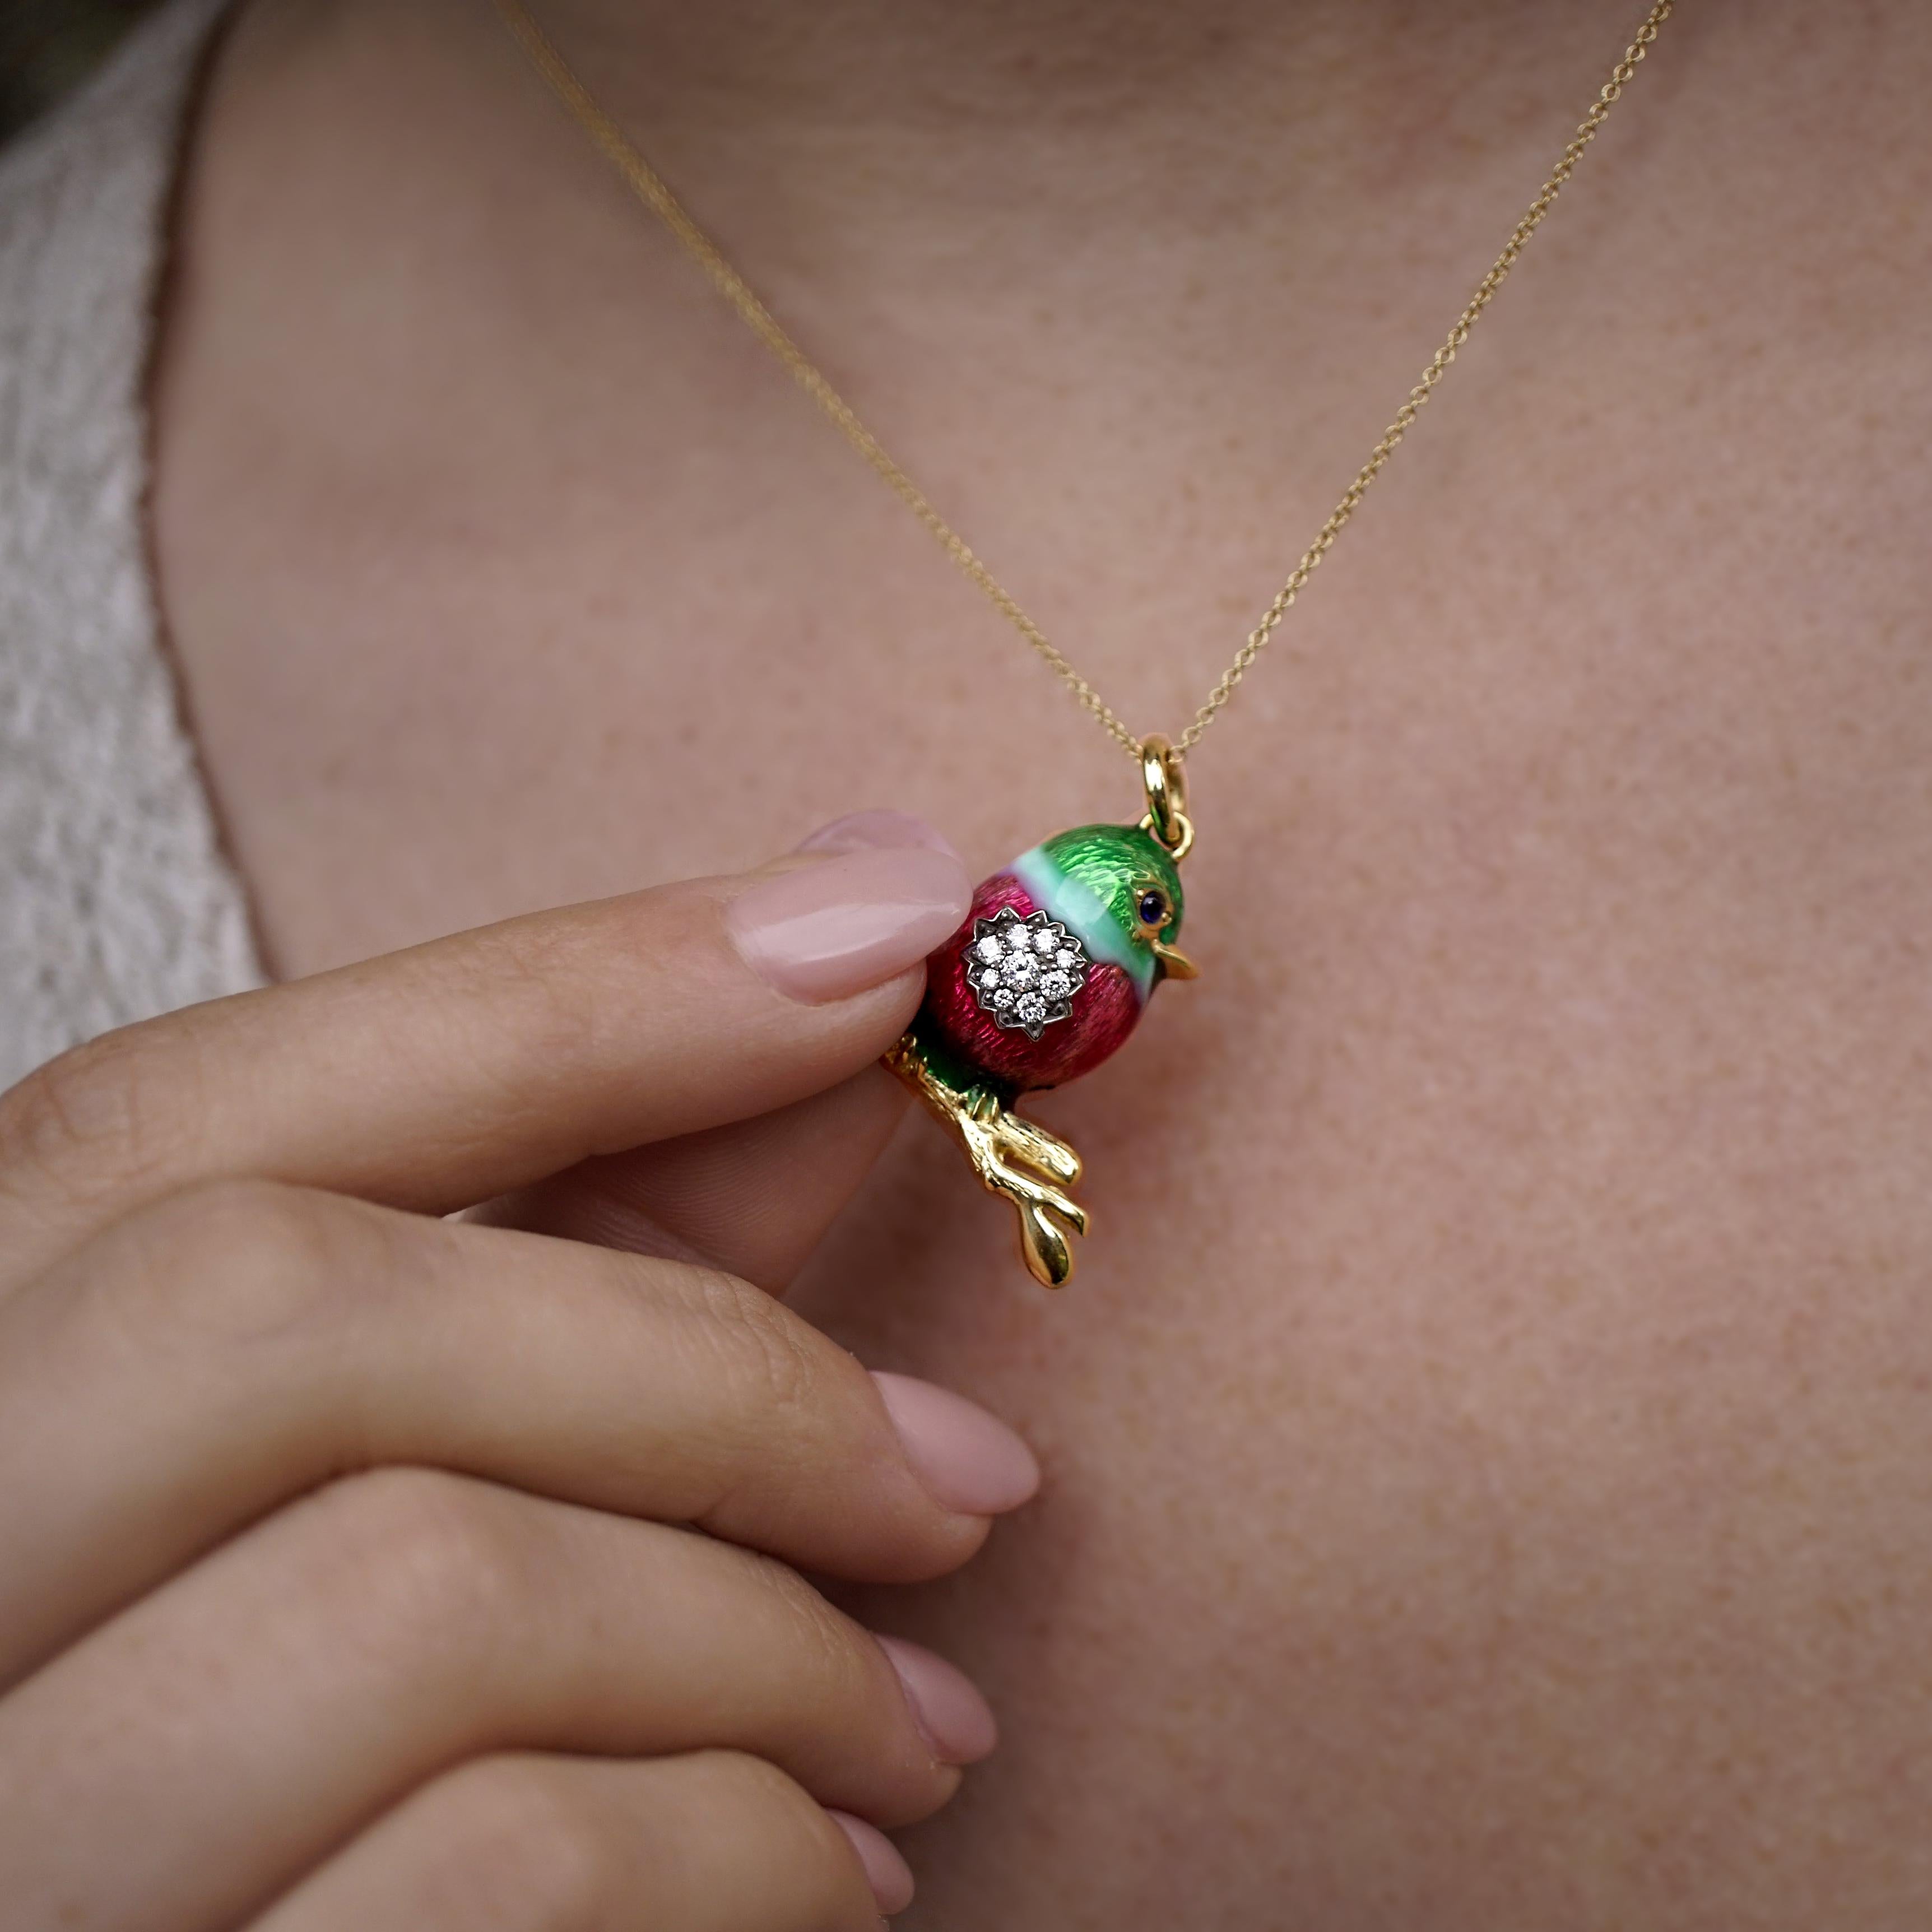 18 Karat Gold, Diamond and Enamel Rainbow Baby Bird Pendant Necklace 'Tweety' For Sale 2